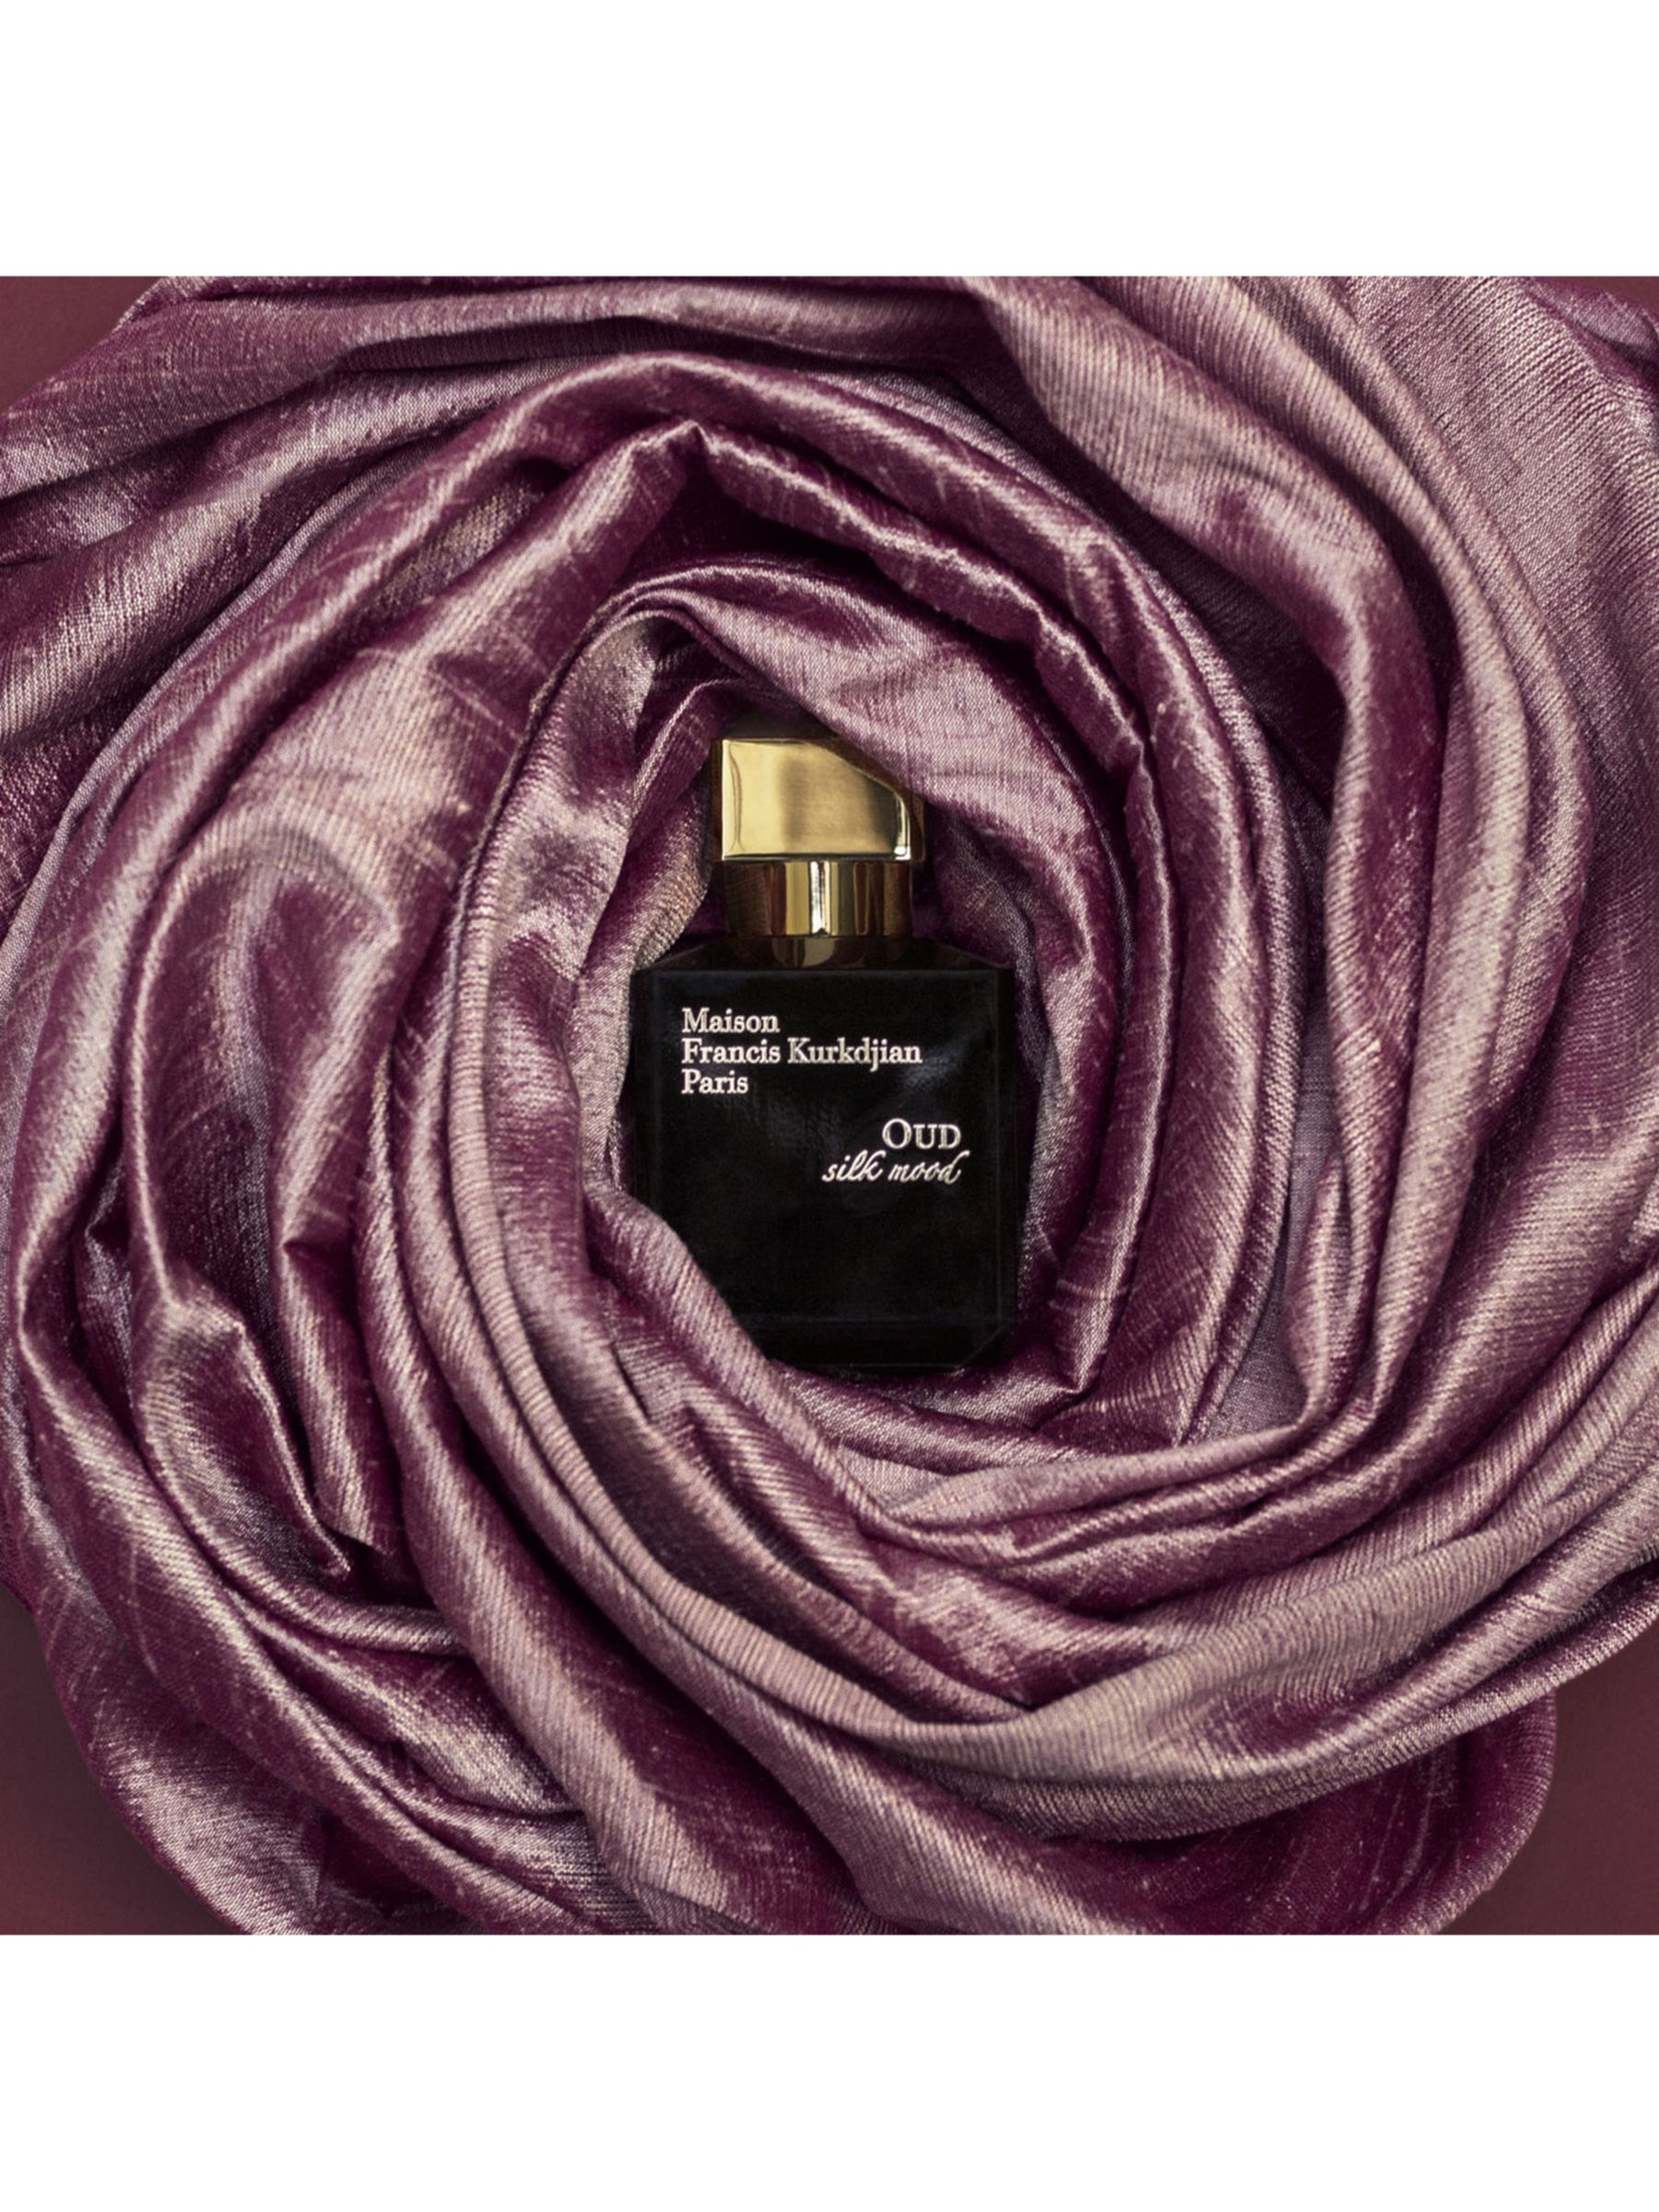 Maison Francis Kurkdjian Oud Silk Mood Eau de Parfum, 70ml